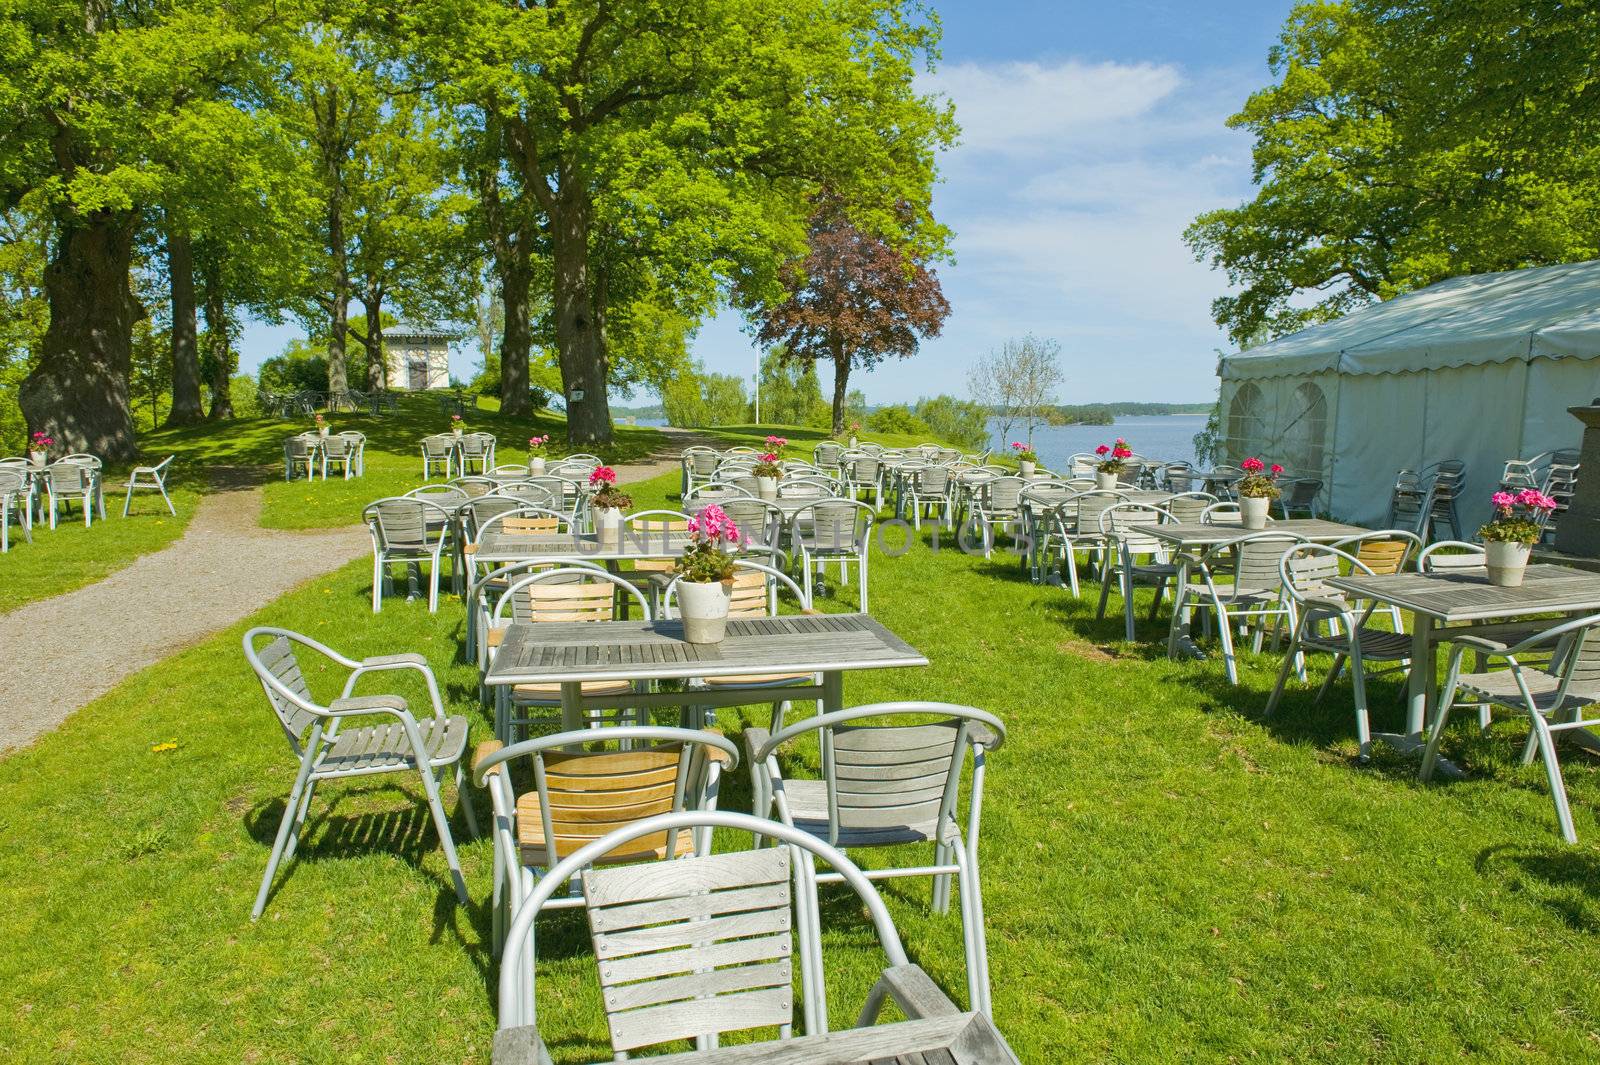 Traditional Swedish summer garden cafe, taken in Sweden on June 2011